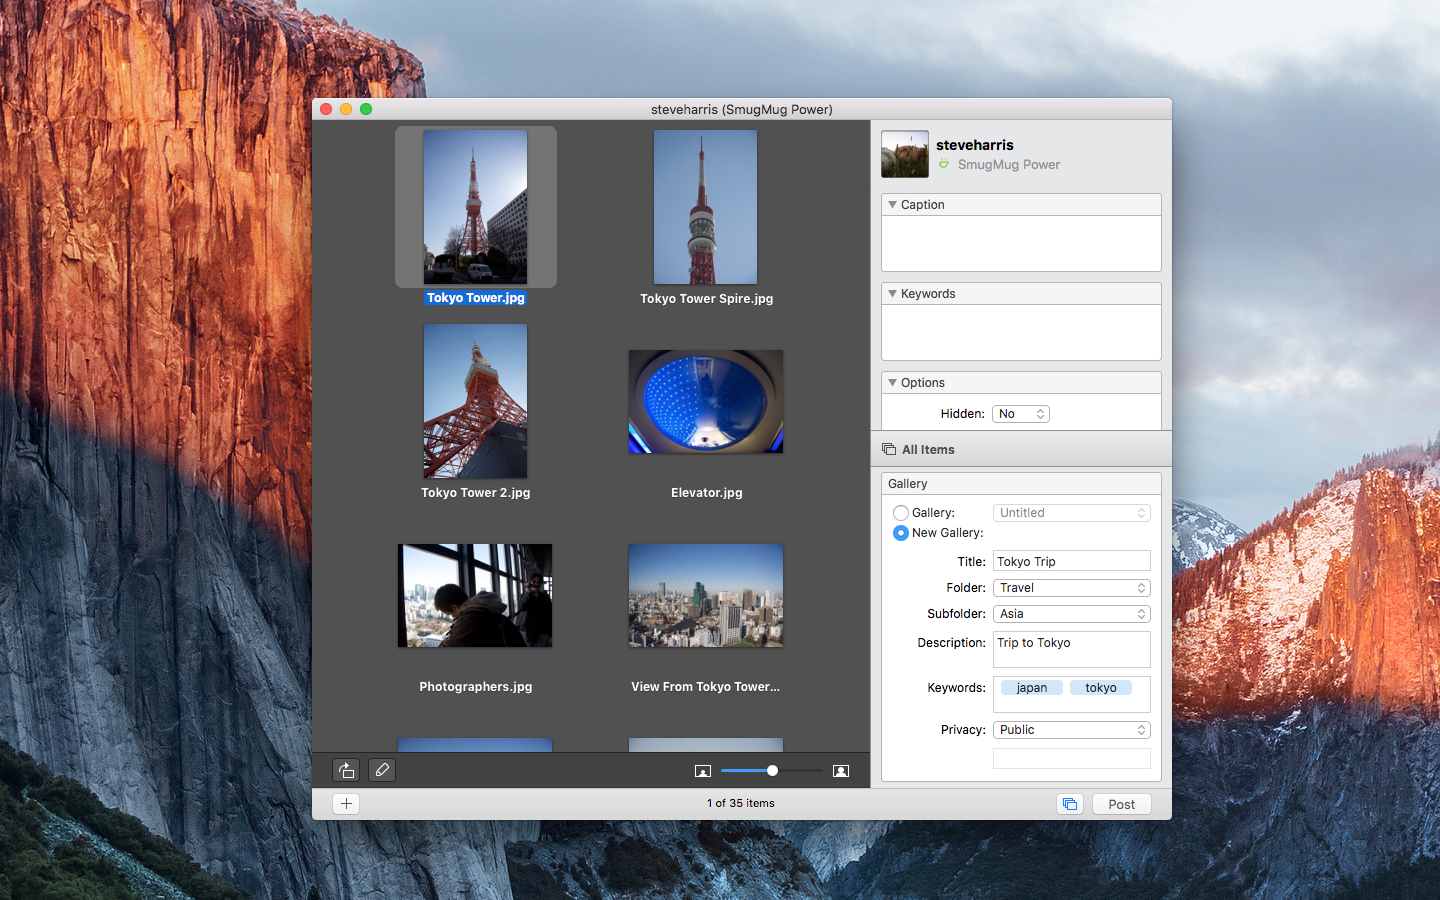 skype mac book pro